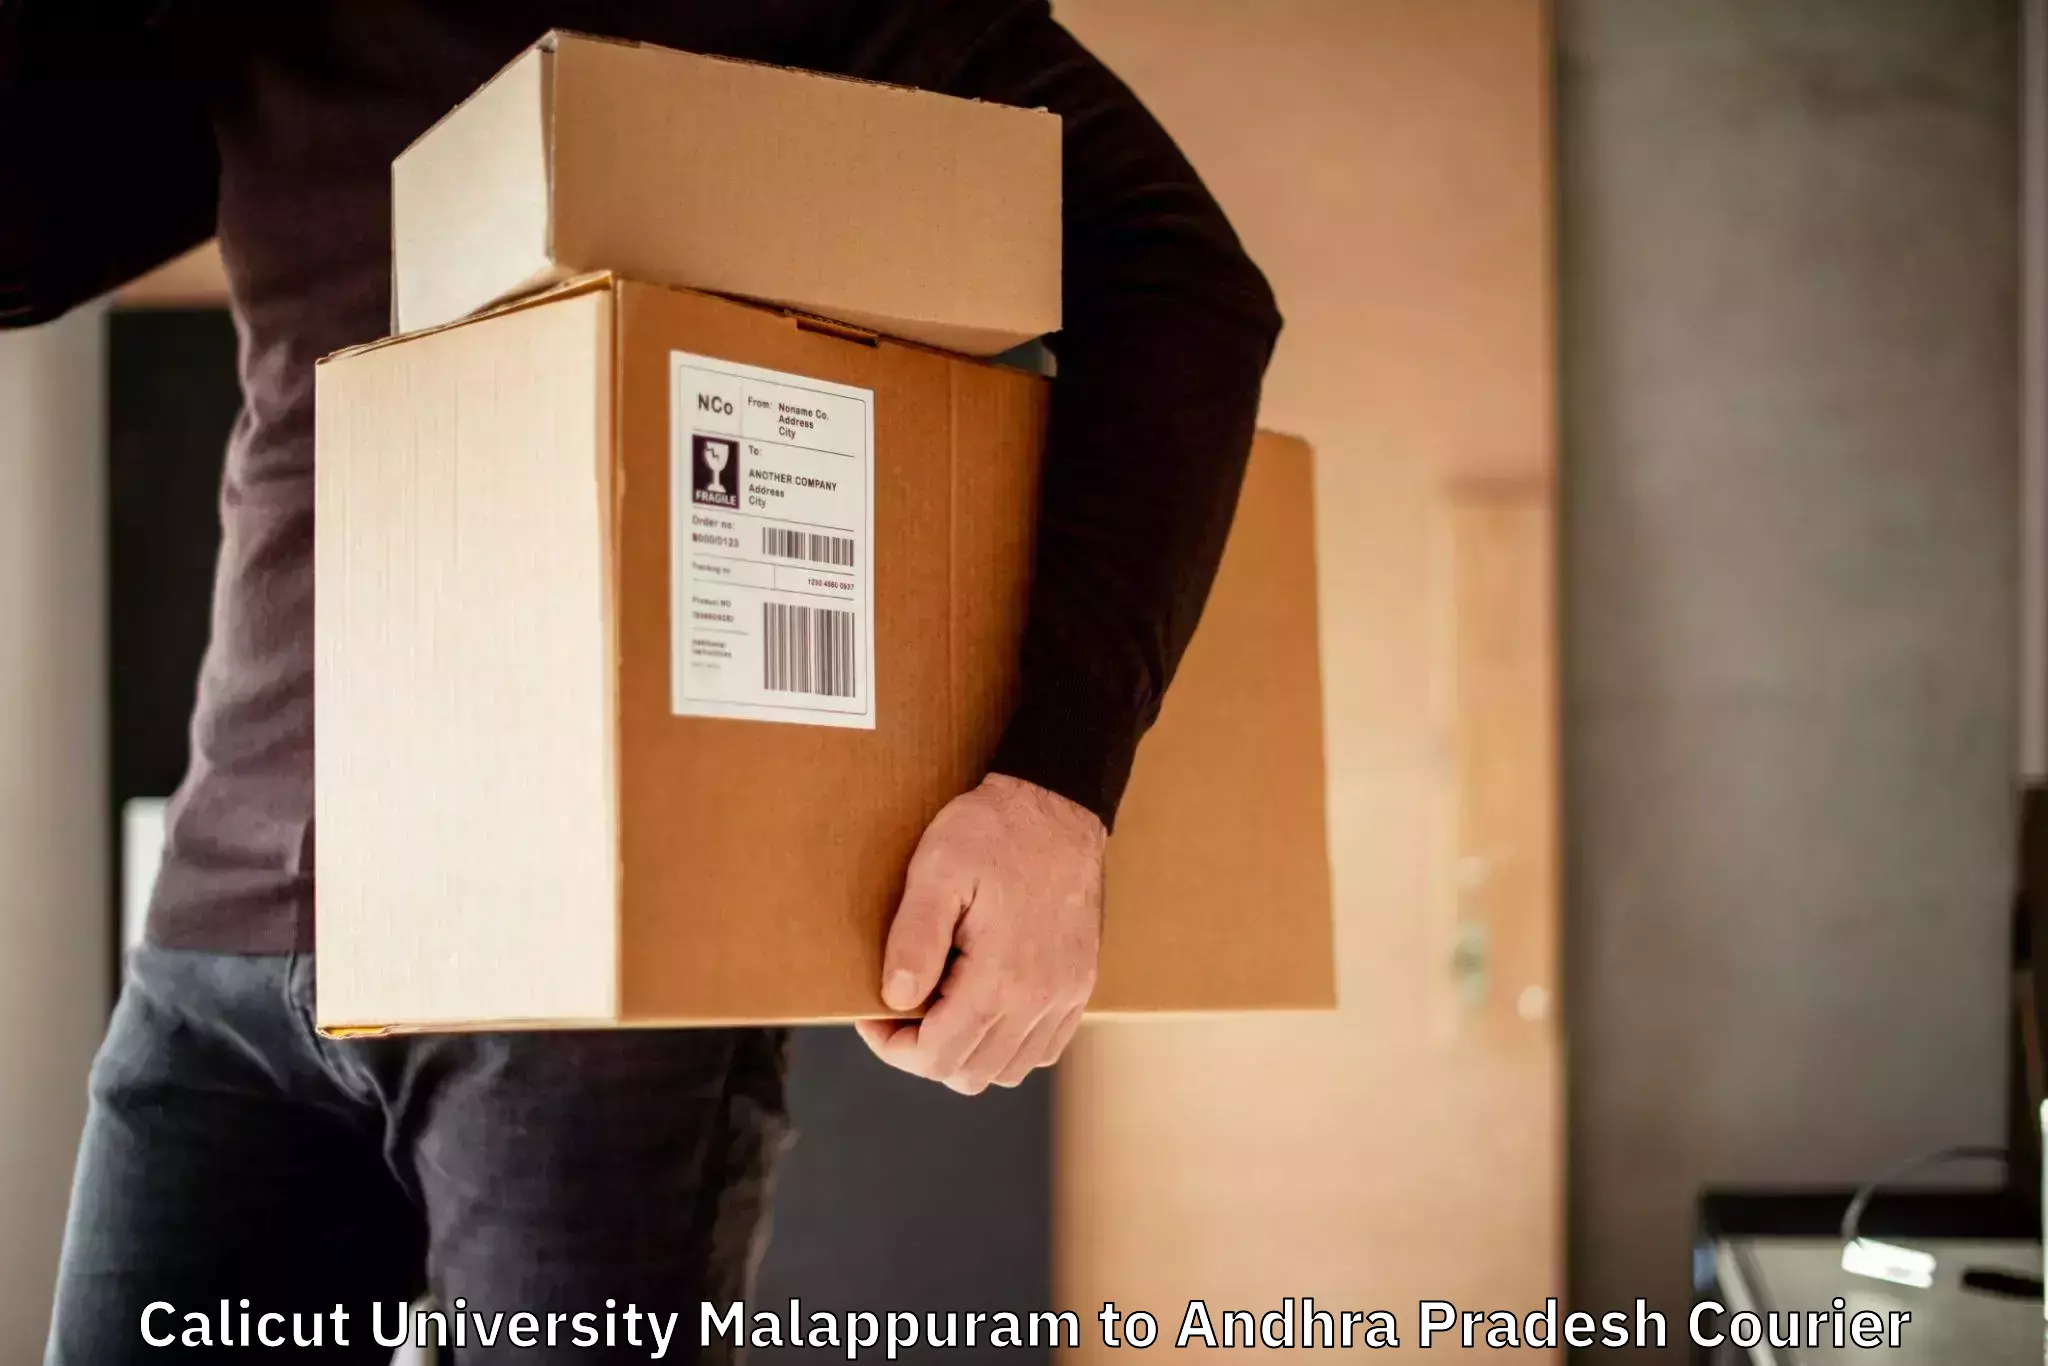 Specialized courier services Calicut University Malappuram to Jinnuru